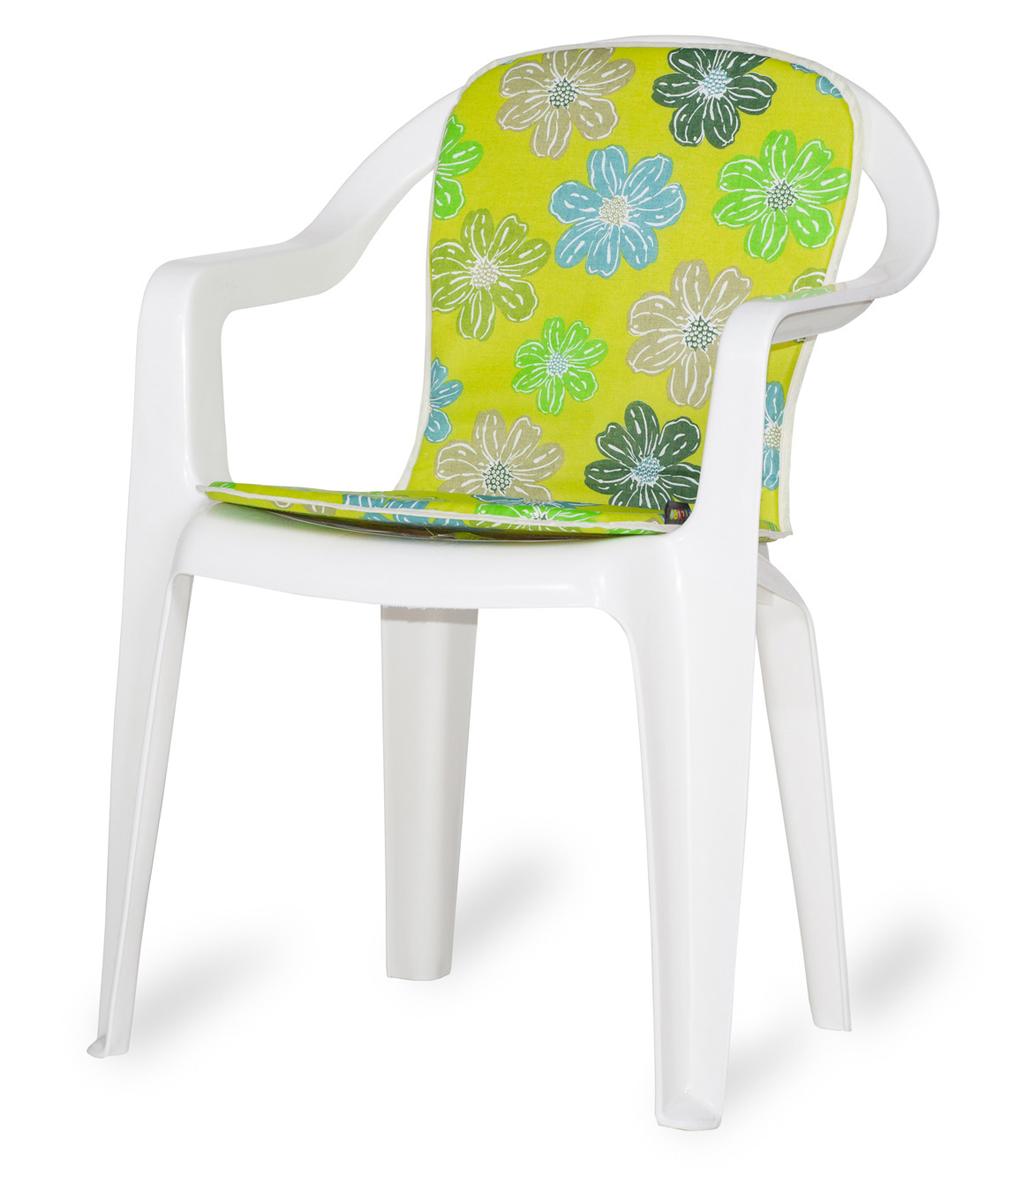 székekhez. Cushion in classical sponge fingers shape for high backrest, plastic garden chairs.